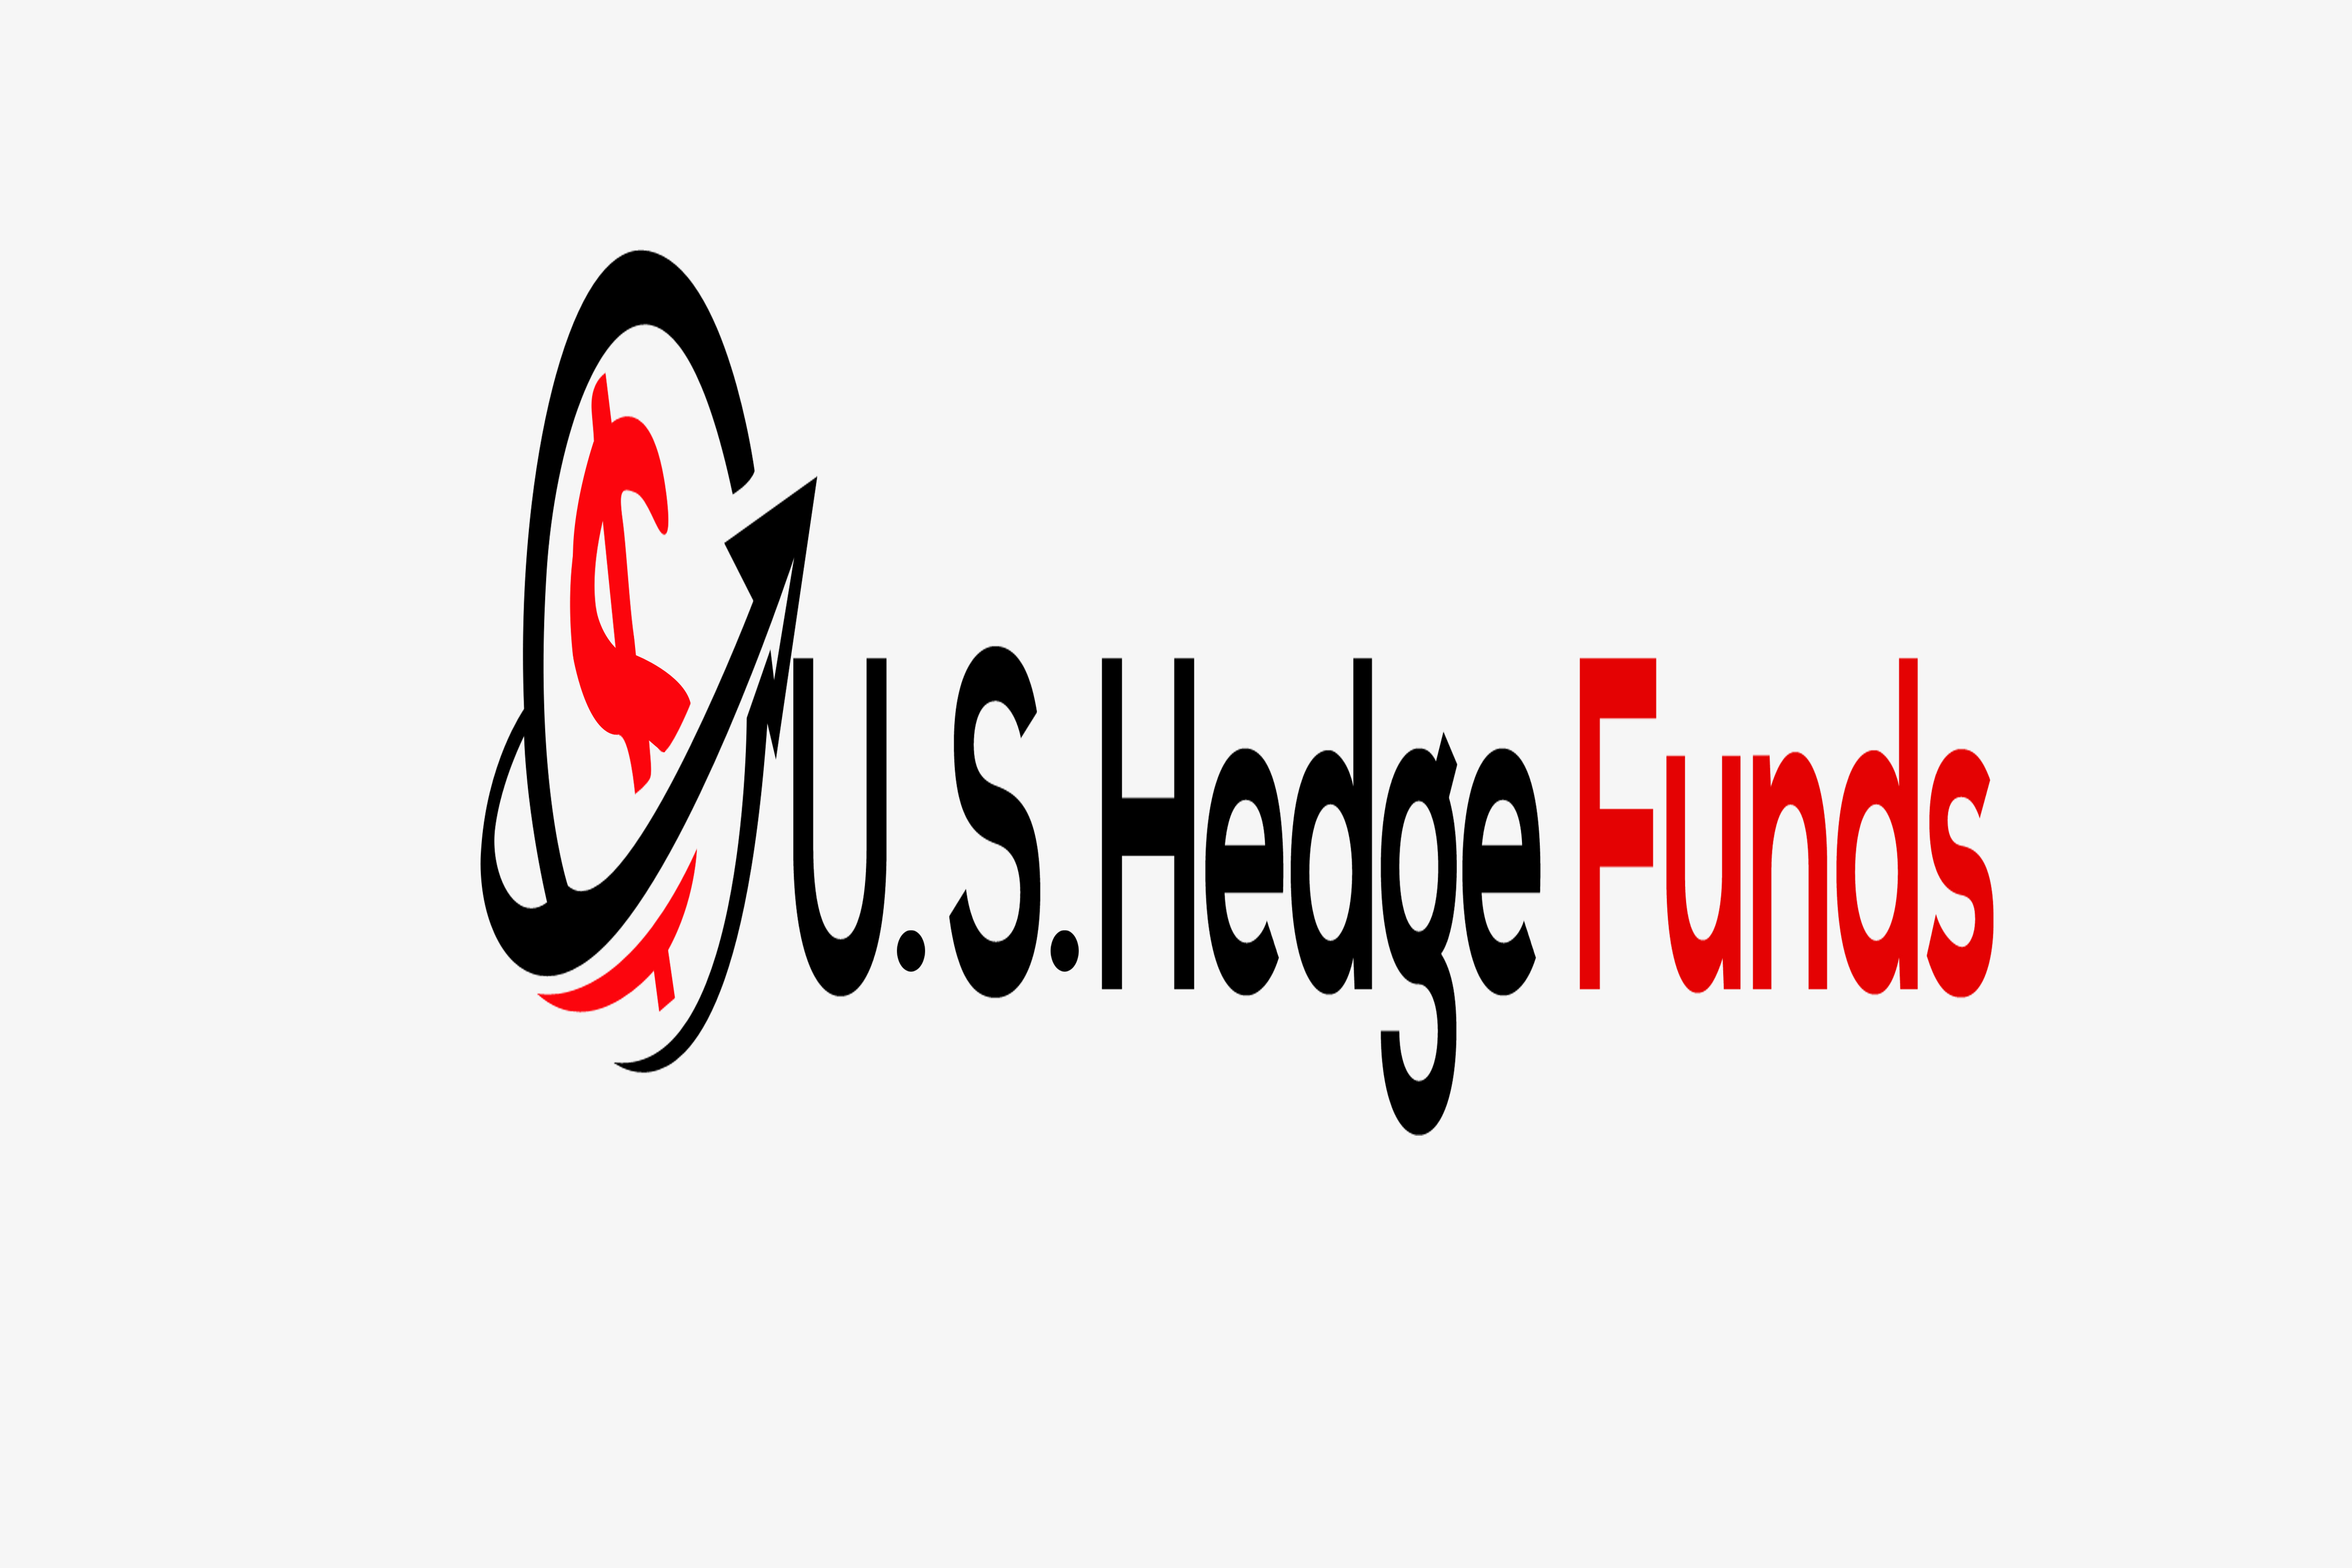 U.S. Hedge Funds